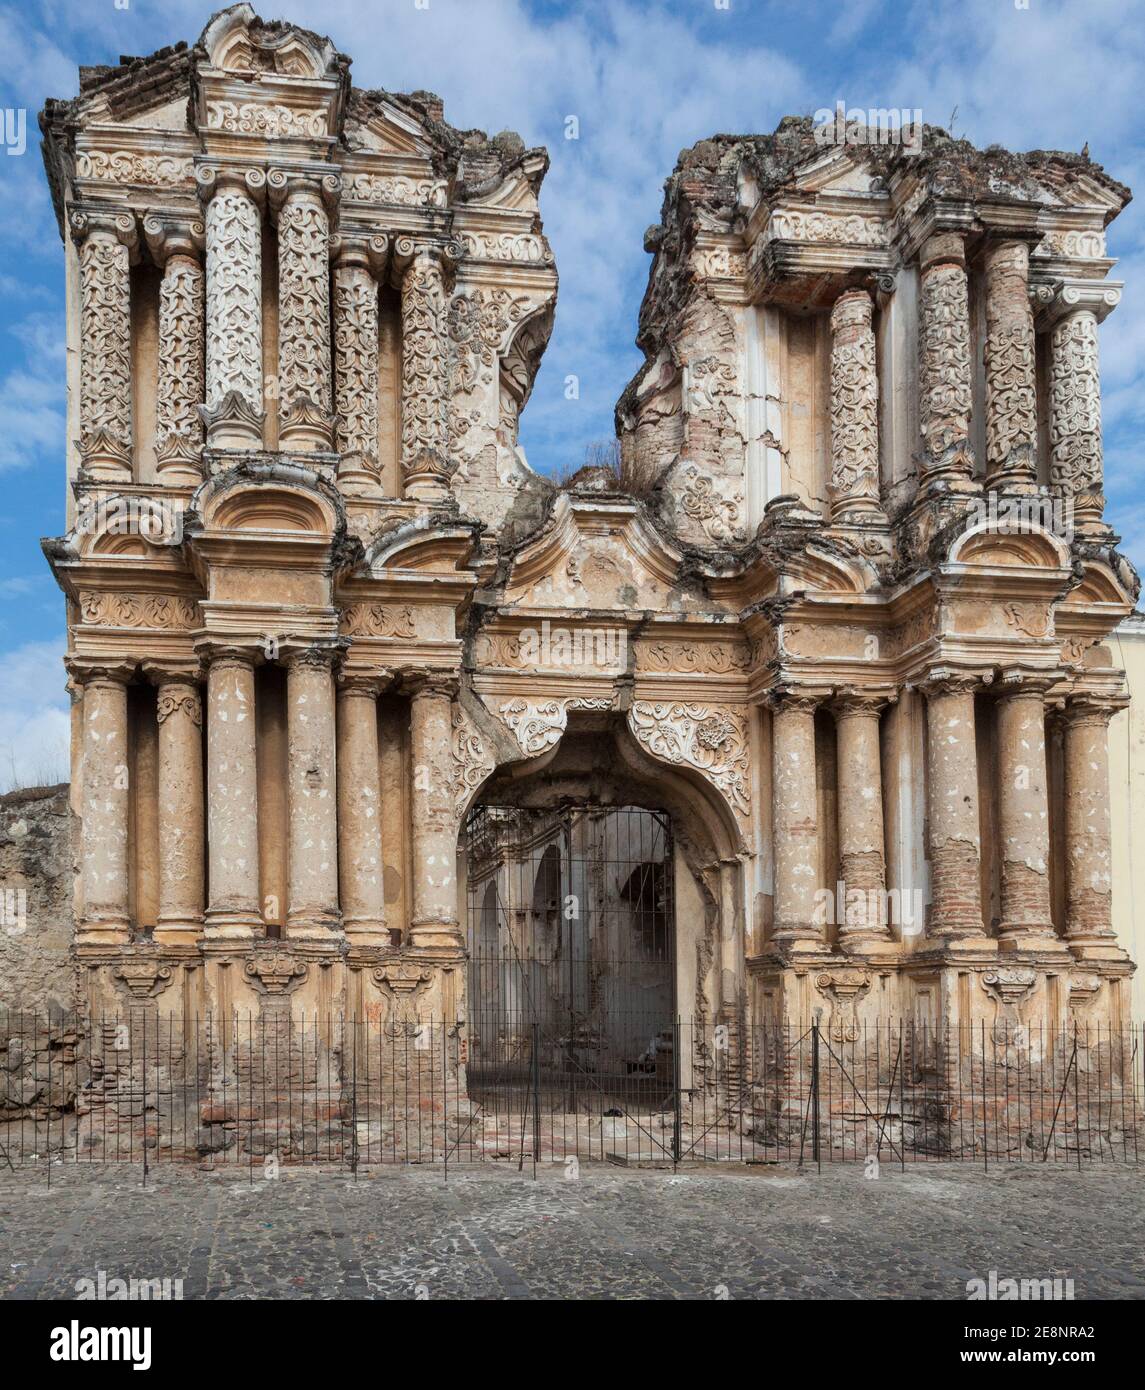 Antigua, Guatemala.  Ruins of Facade of El Carmen Church and Convent. Stock Photo